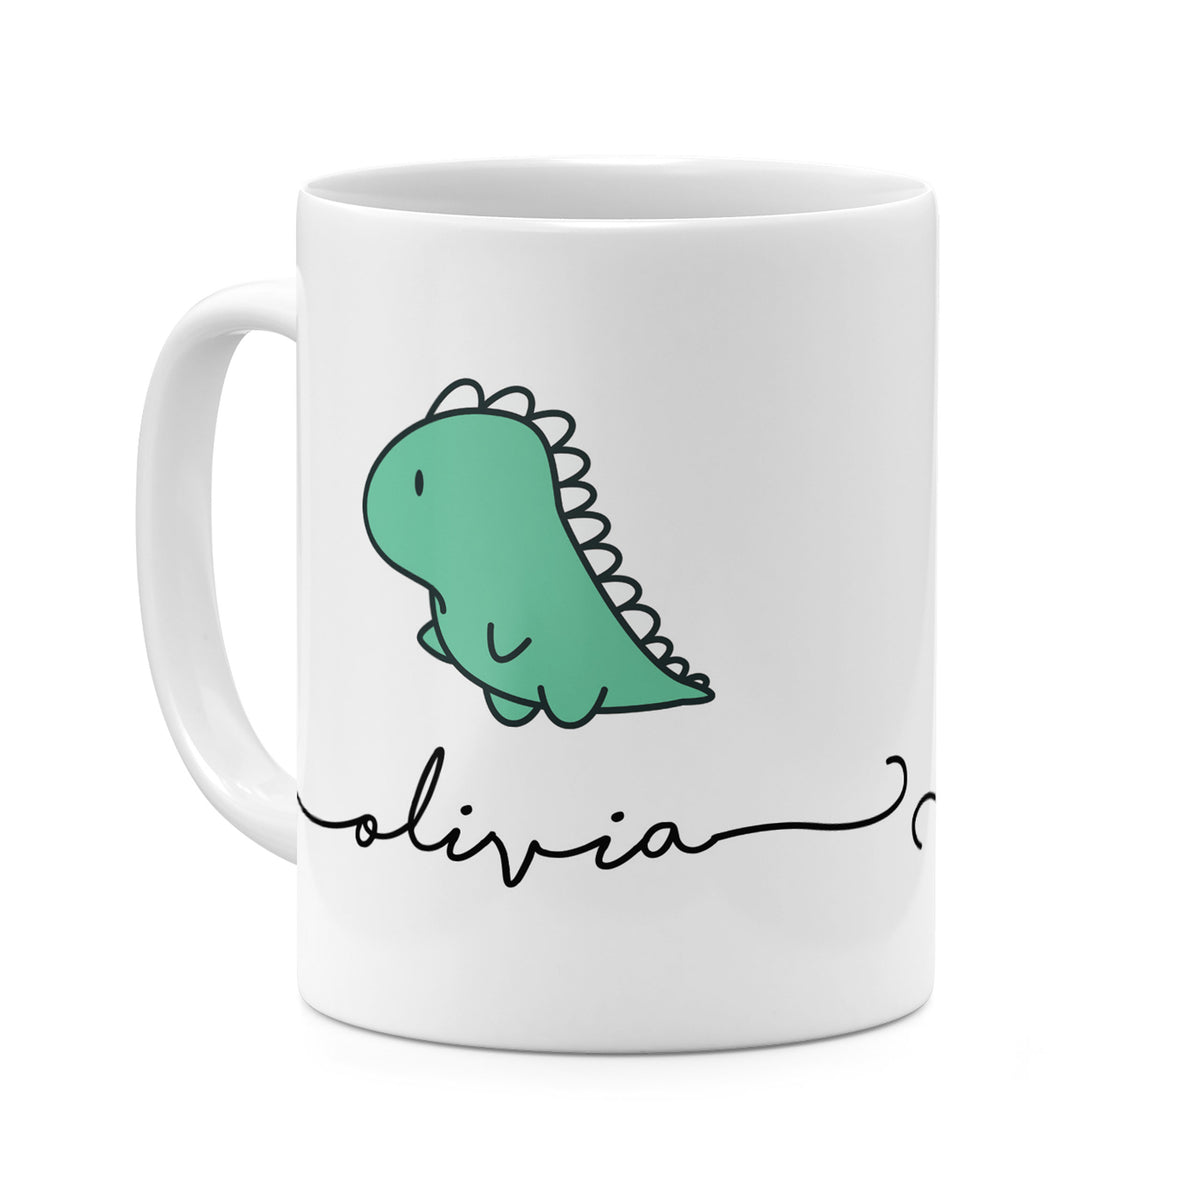 Personalised Ceramic Mug with Name Initials Text Chubby Dinosaur Kawaii